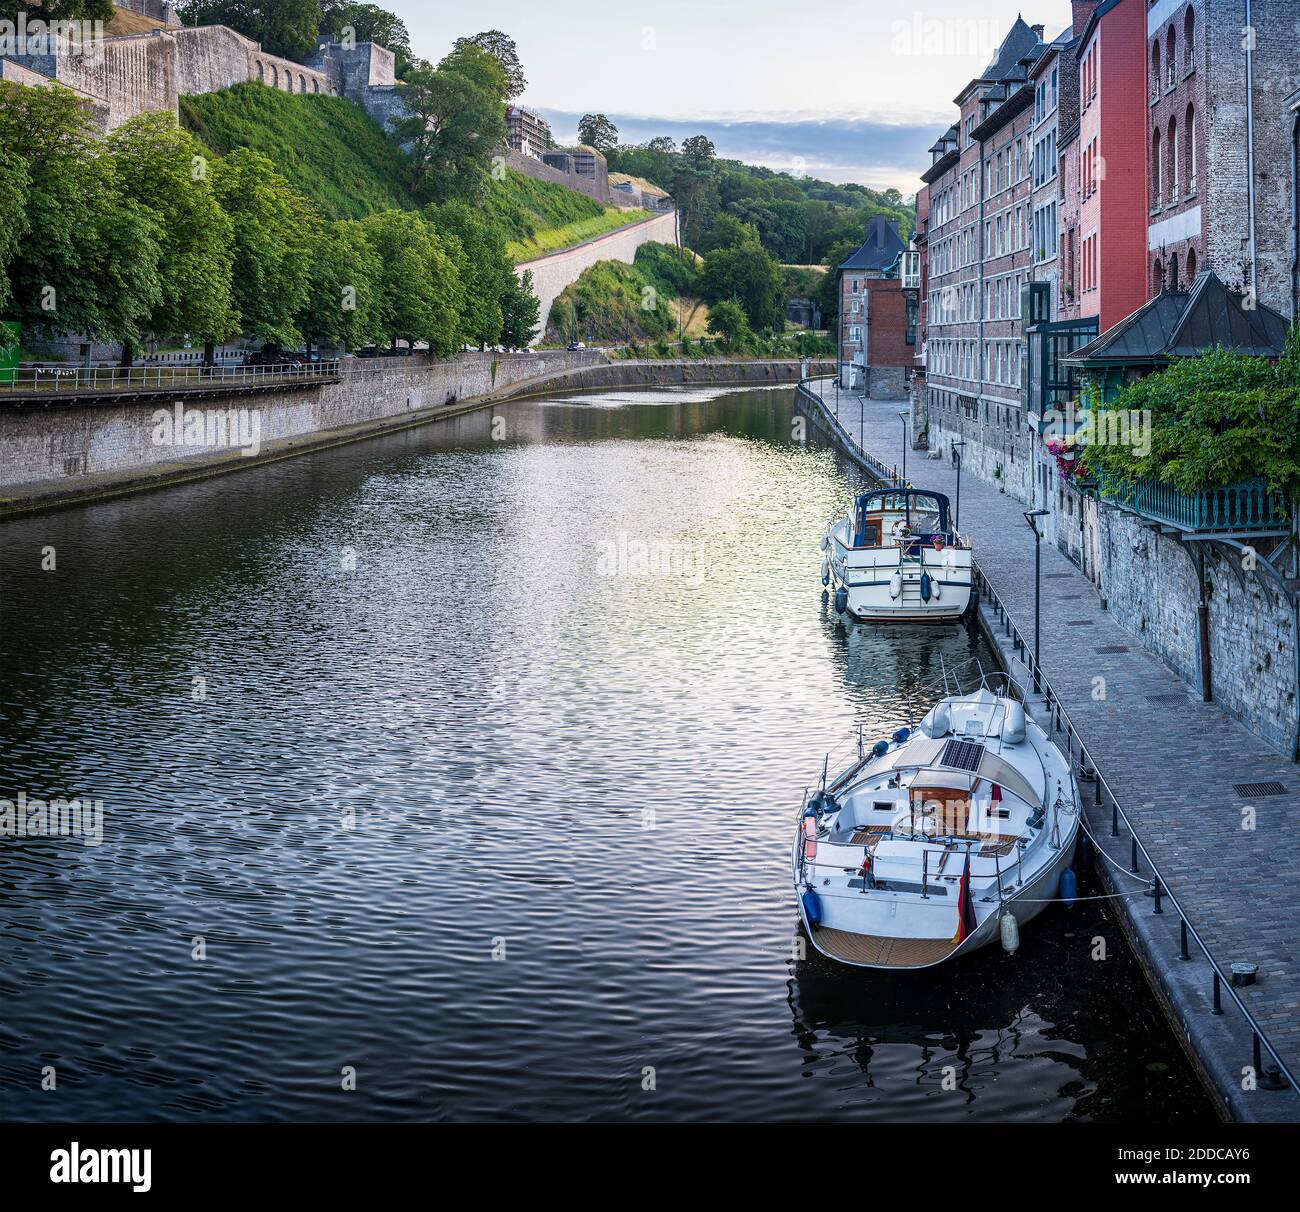 Belgium, Namur Province, Namur, Motorboats moored along city canal Stock Photo